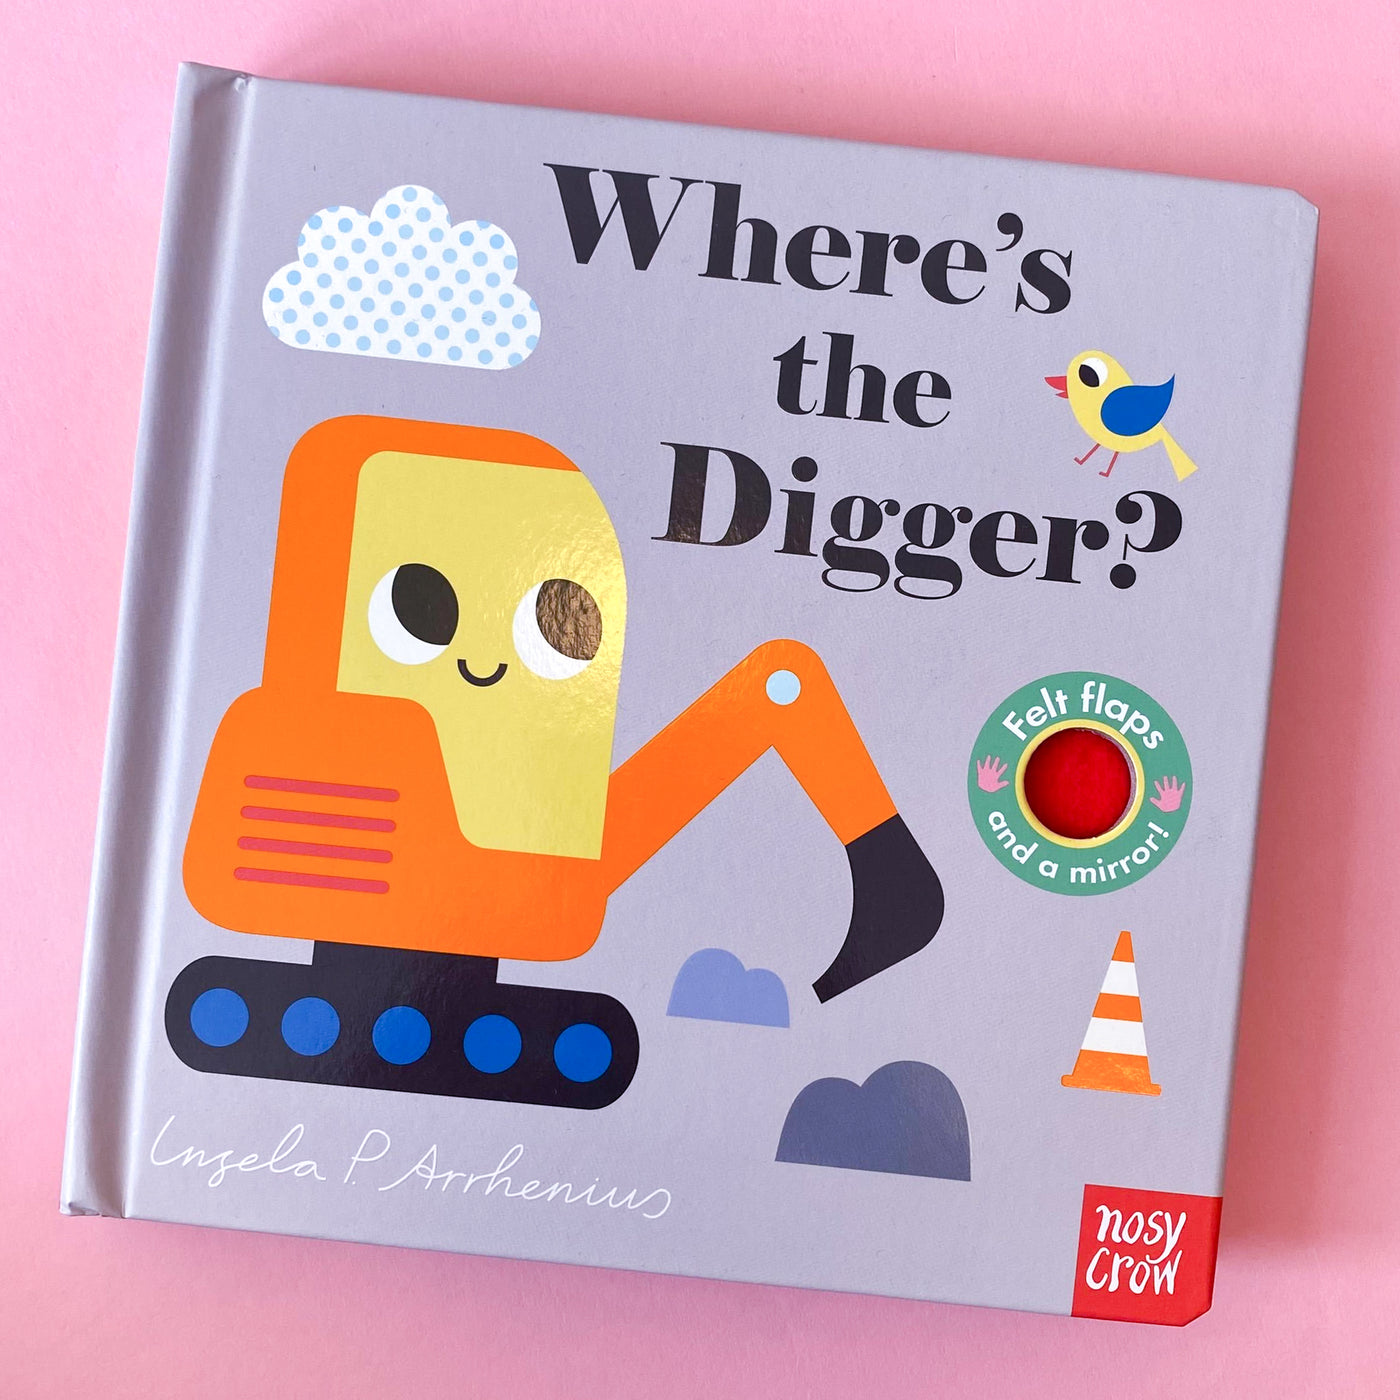 Where's the Digger? by Ingela P Arrhenius